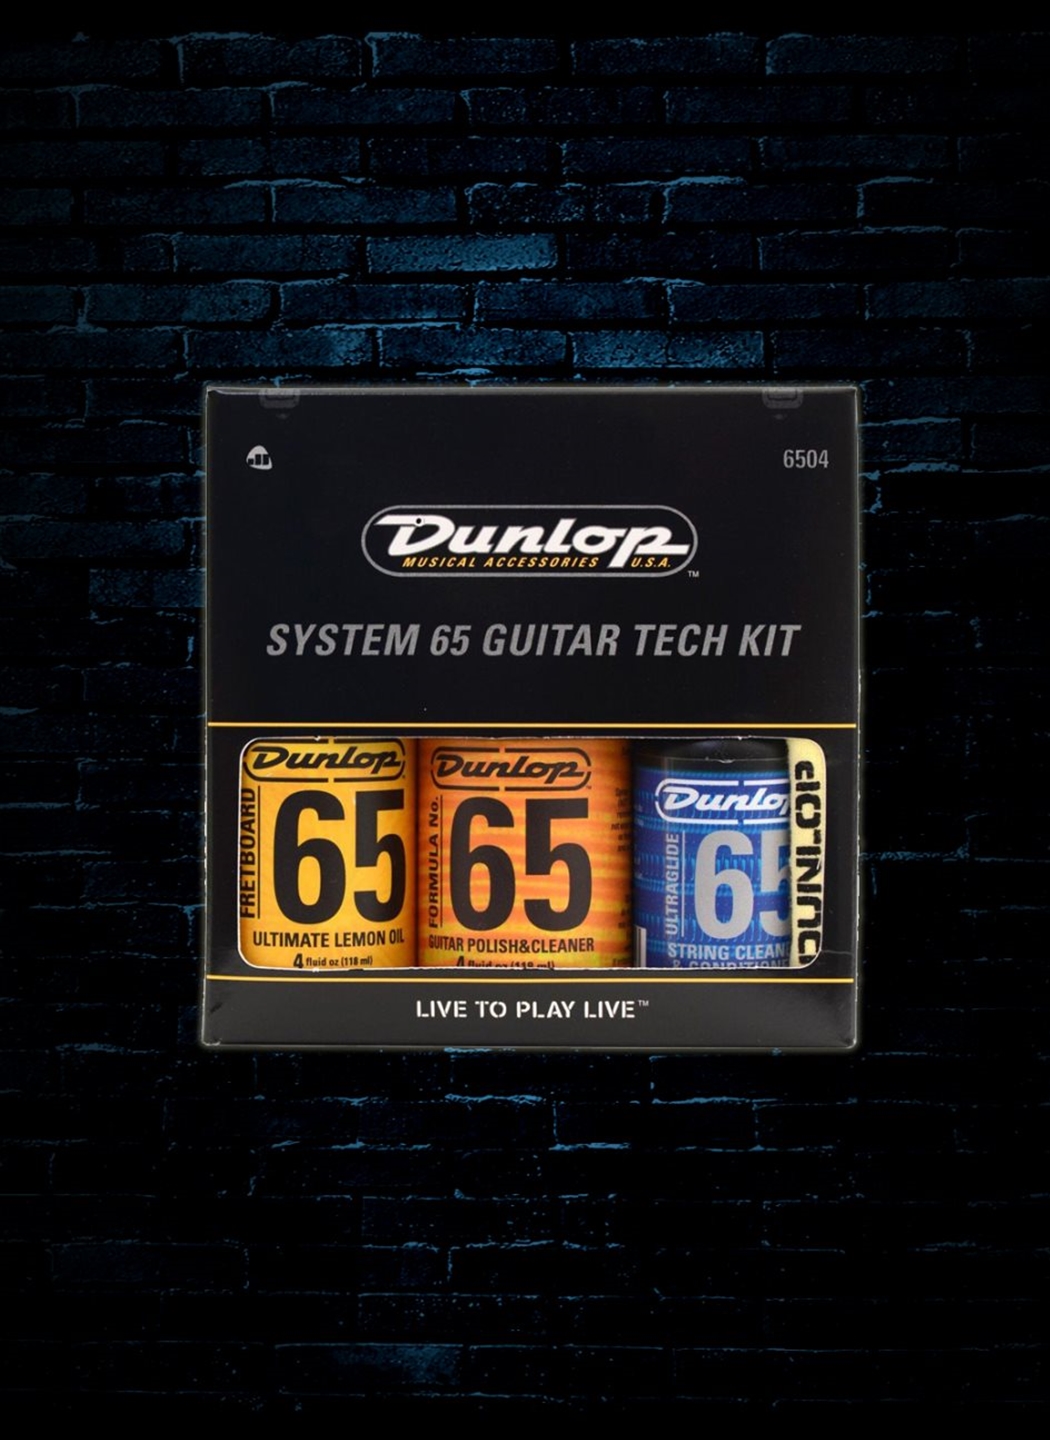 Dunlop System 65 Guitar Maintenance Kit